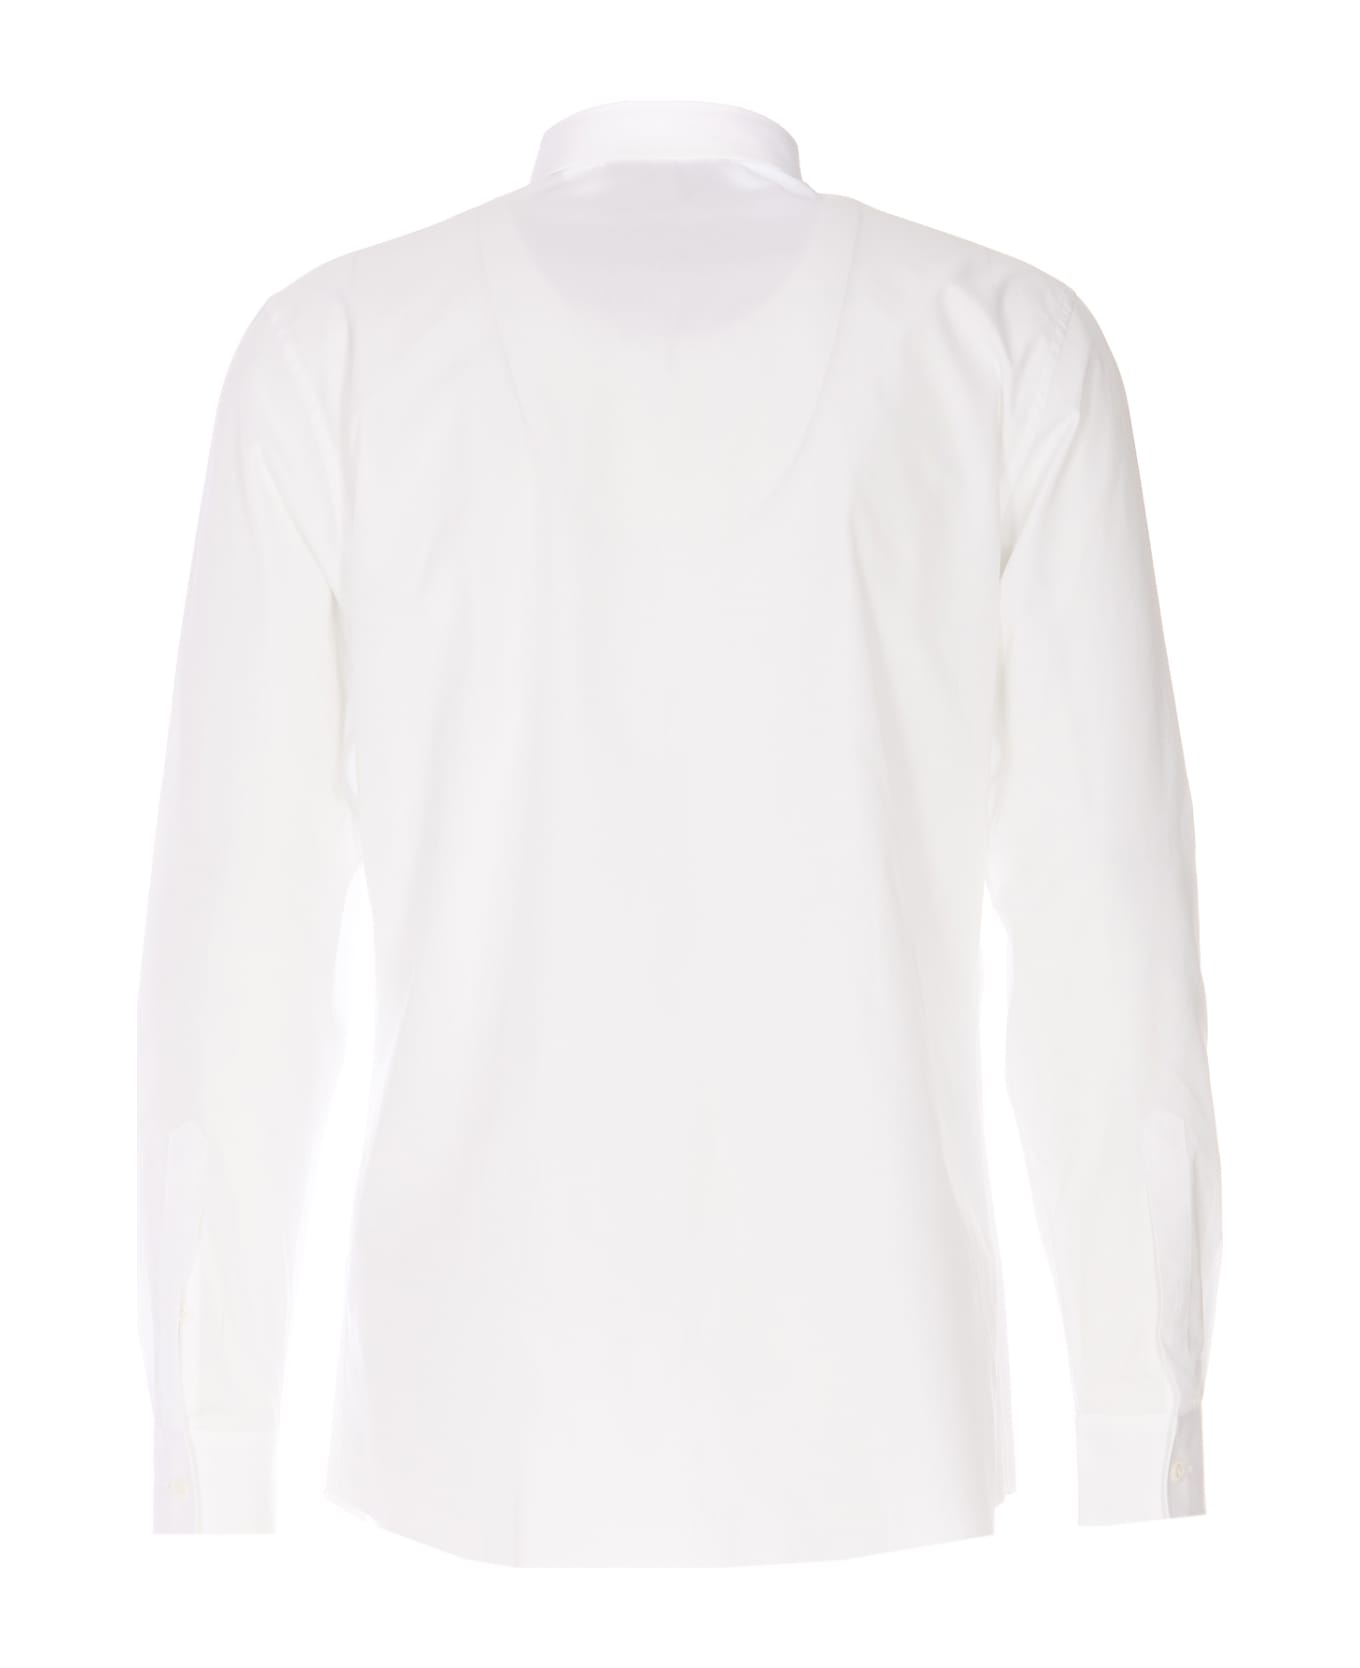 Moschino Teddy Bear Logo Shirt - White